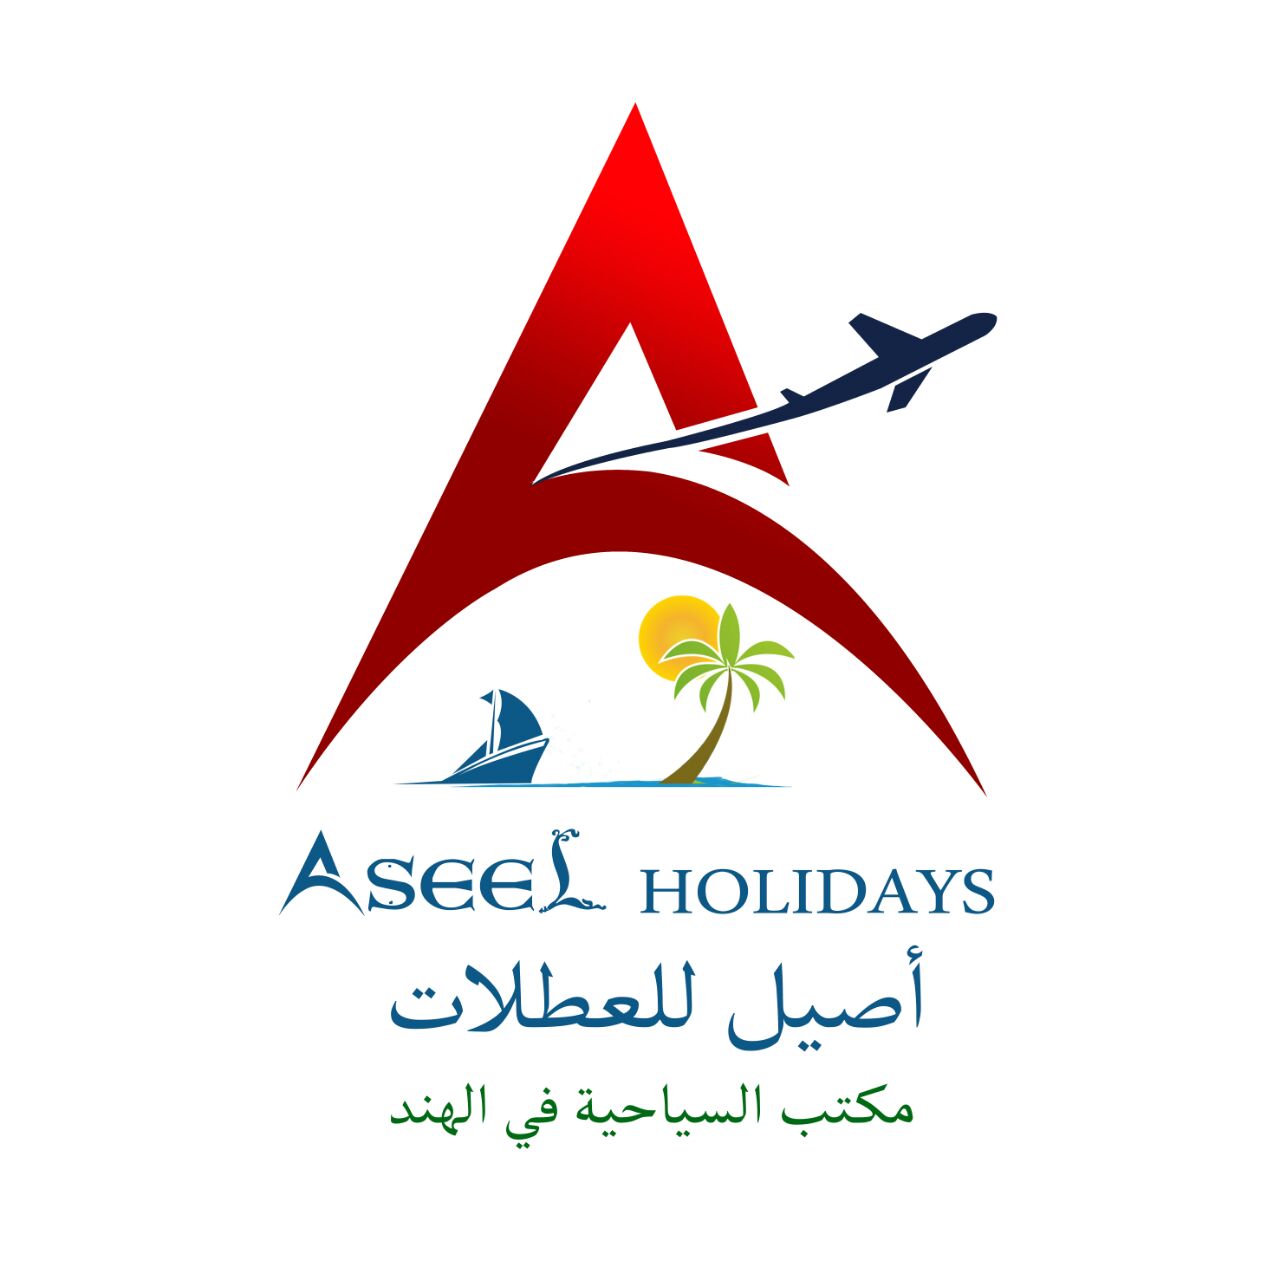 Aseel Holidays